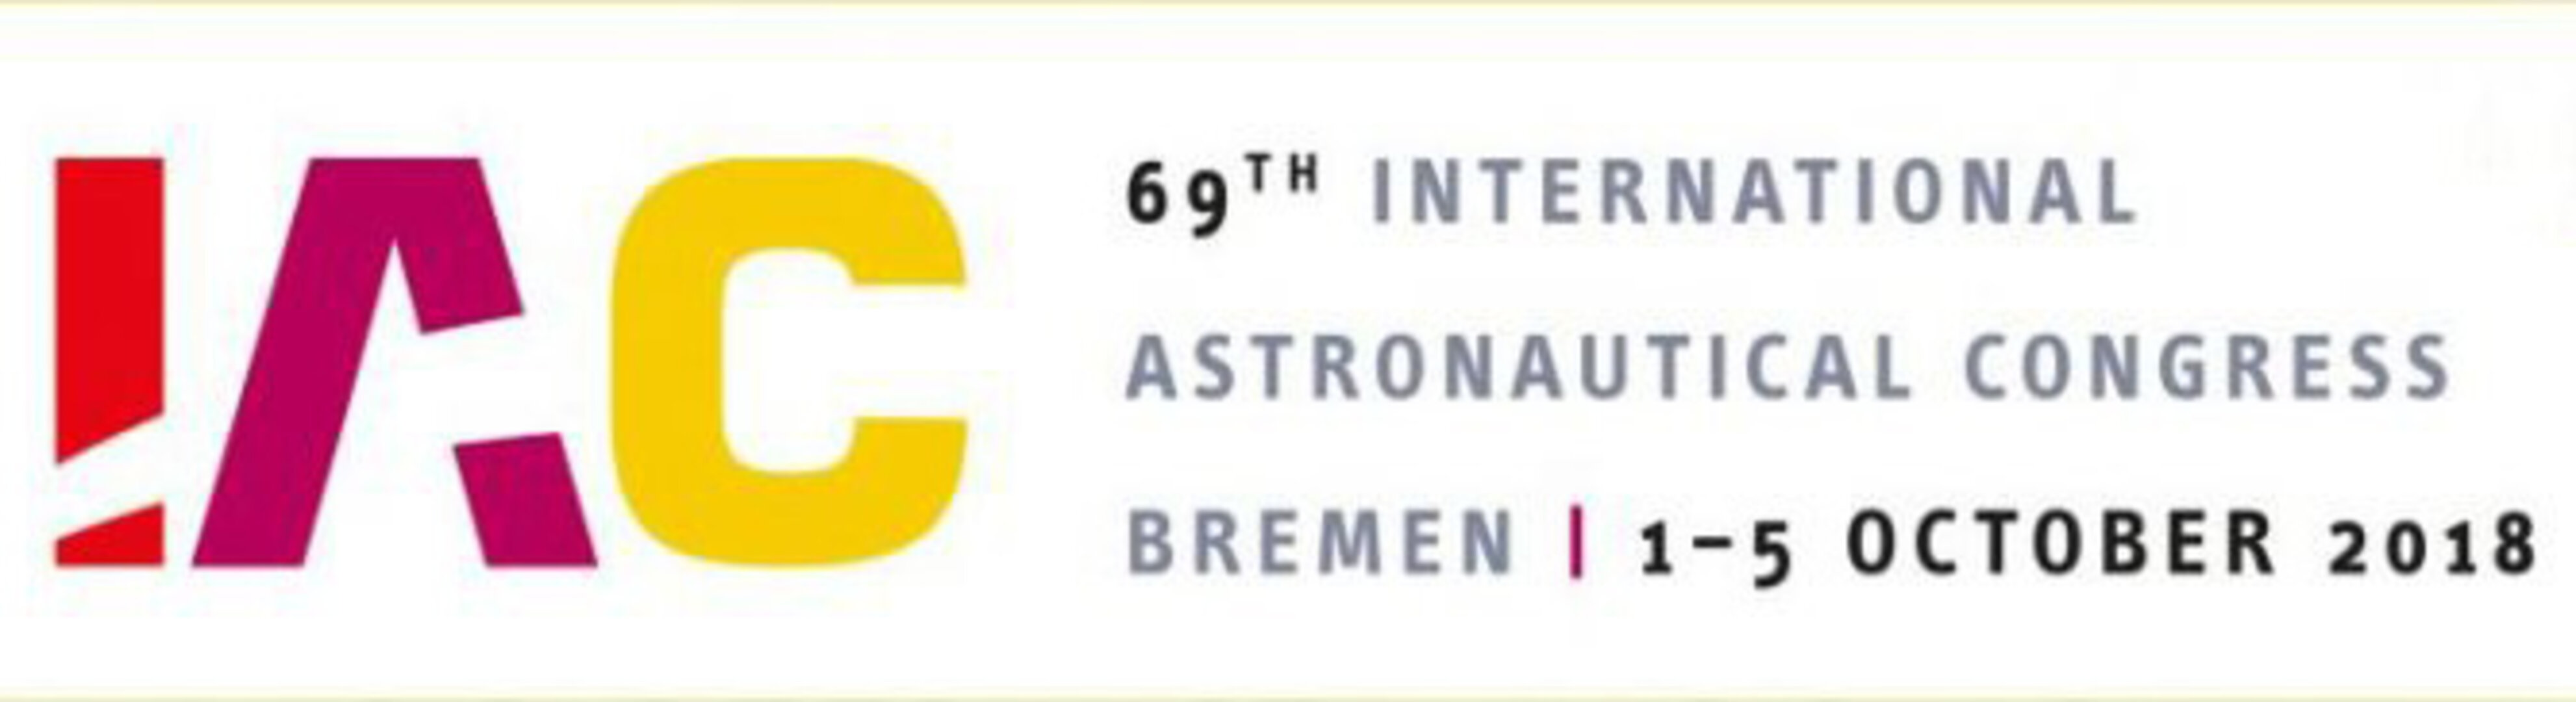 International Astronautical Congress (IAC) 2018, Bremen, Germany